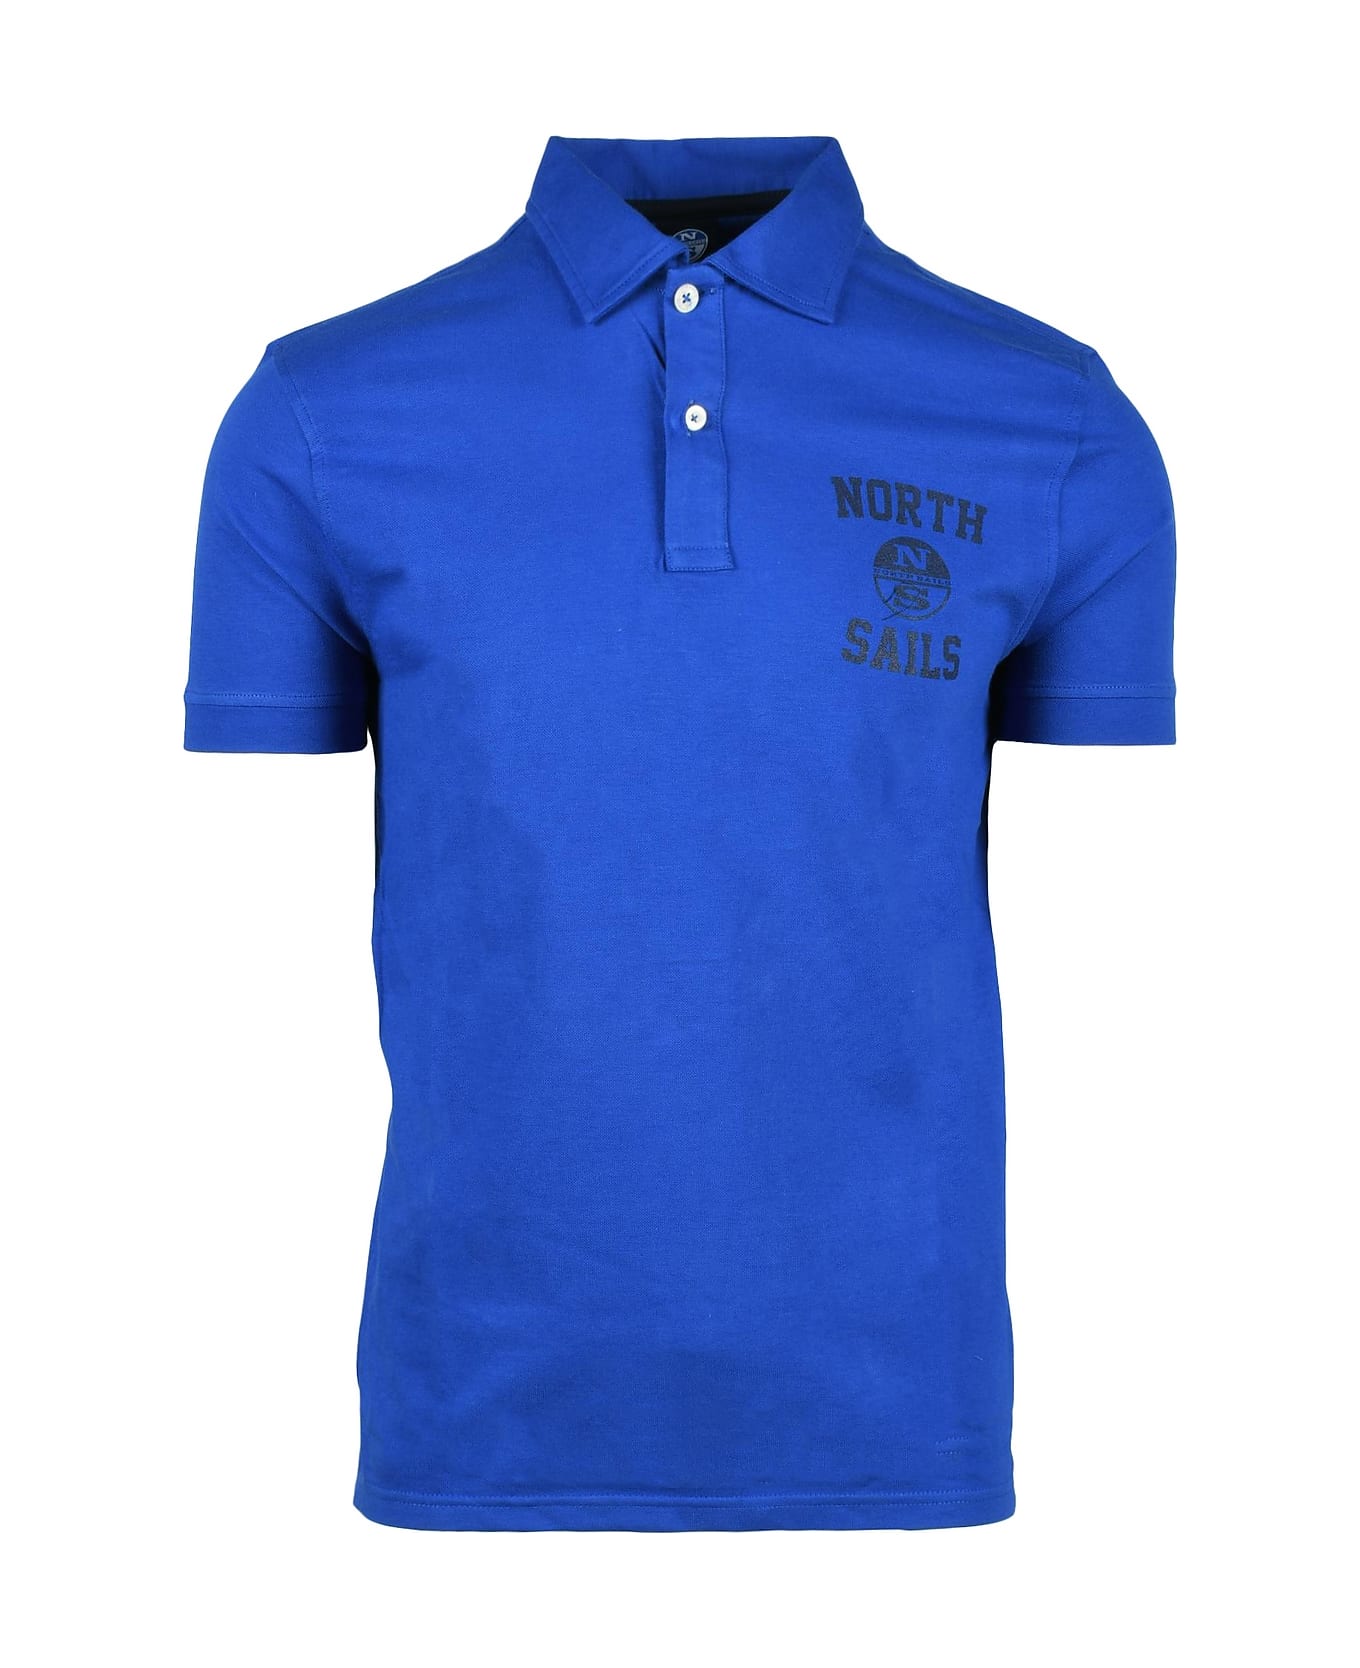 North Sails Men's Blue Shirt - Blue